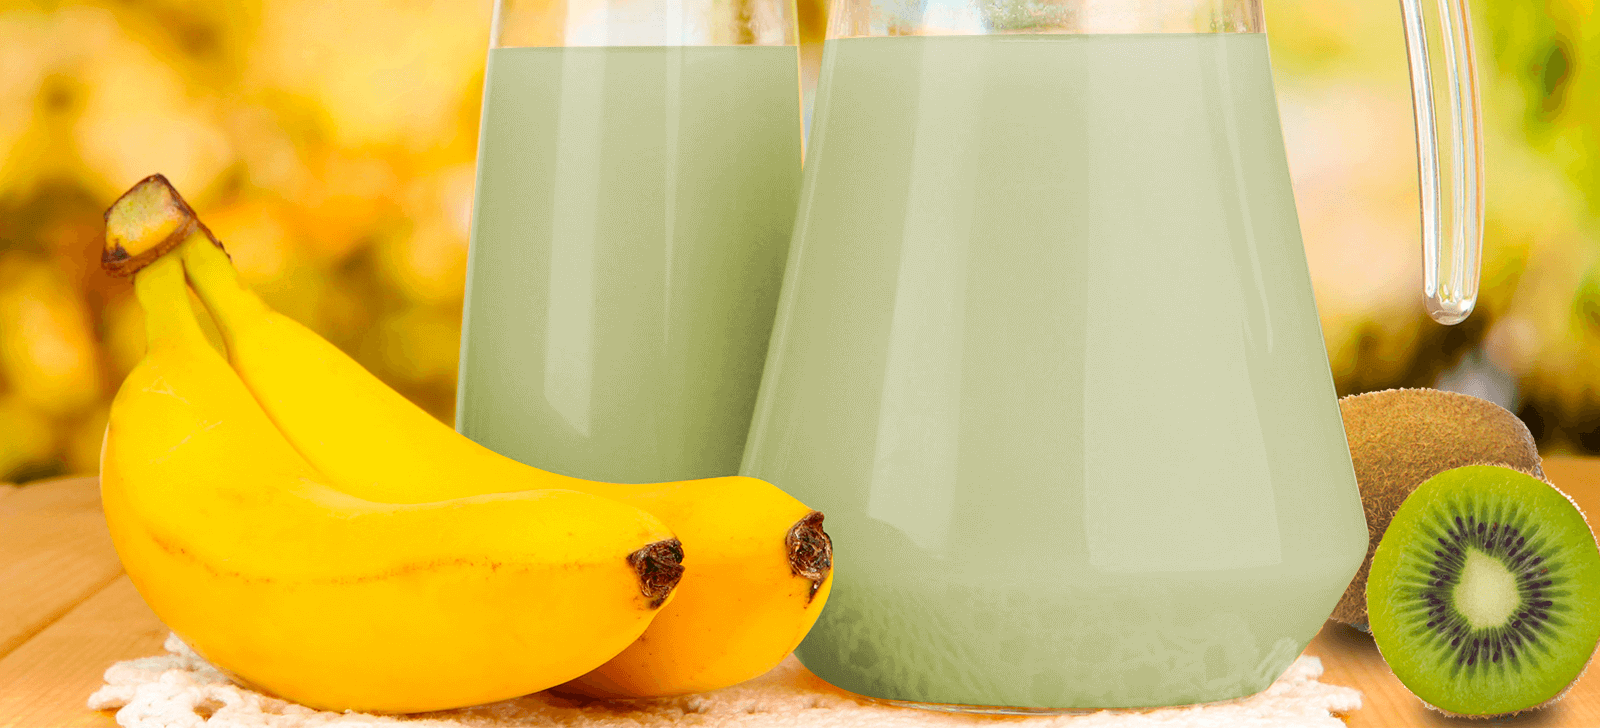 farmacia manipulacao campinas nova natural blog natureza magistral suco de banana kiwi reduzir dor muscular